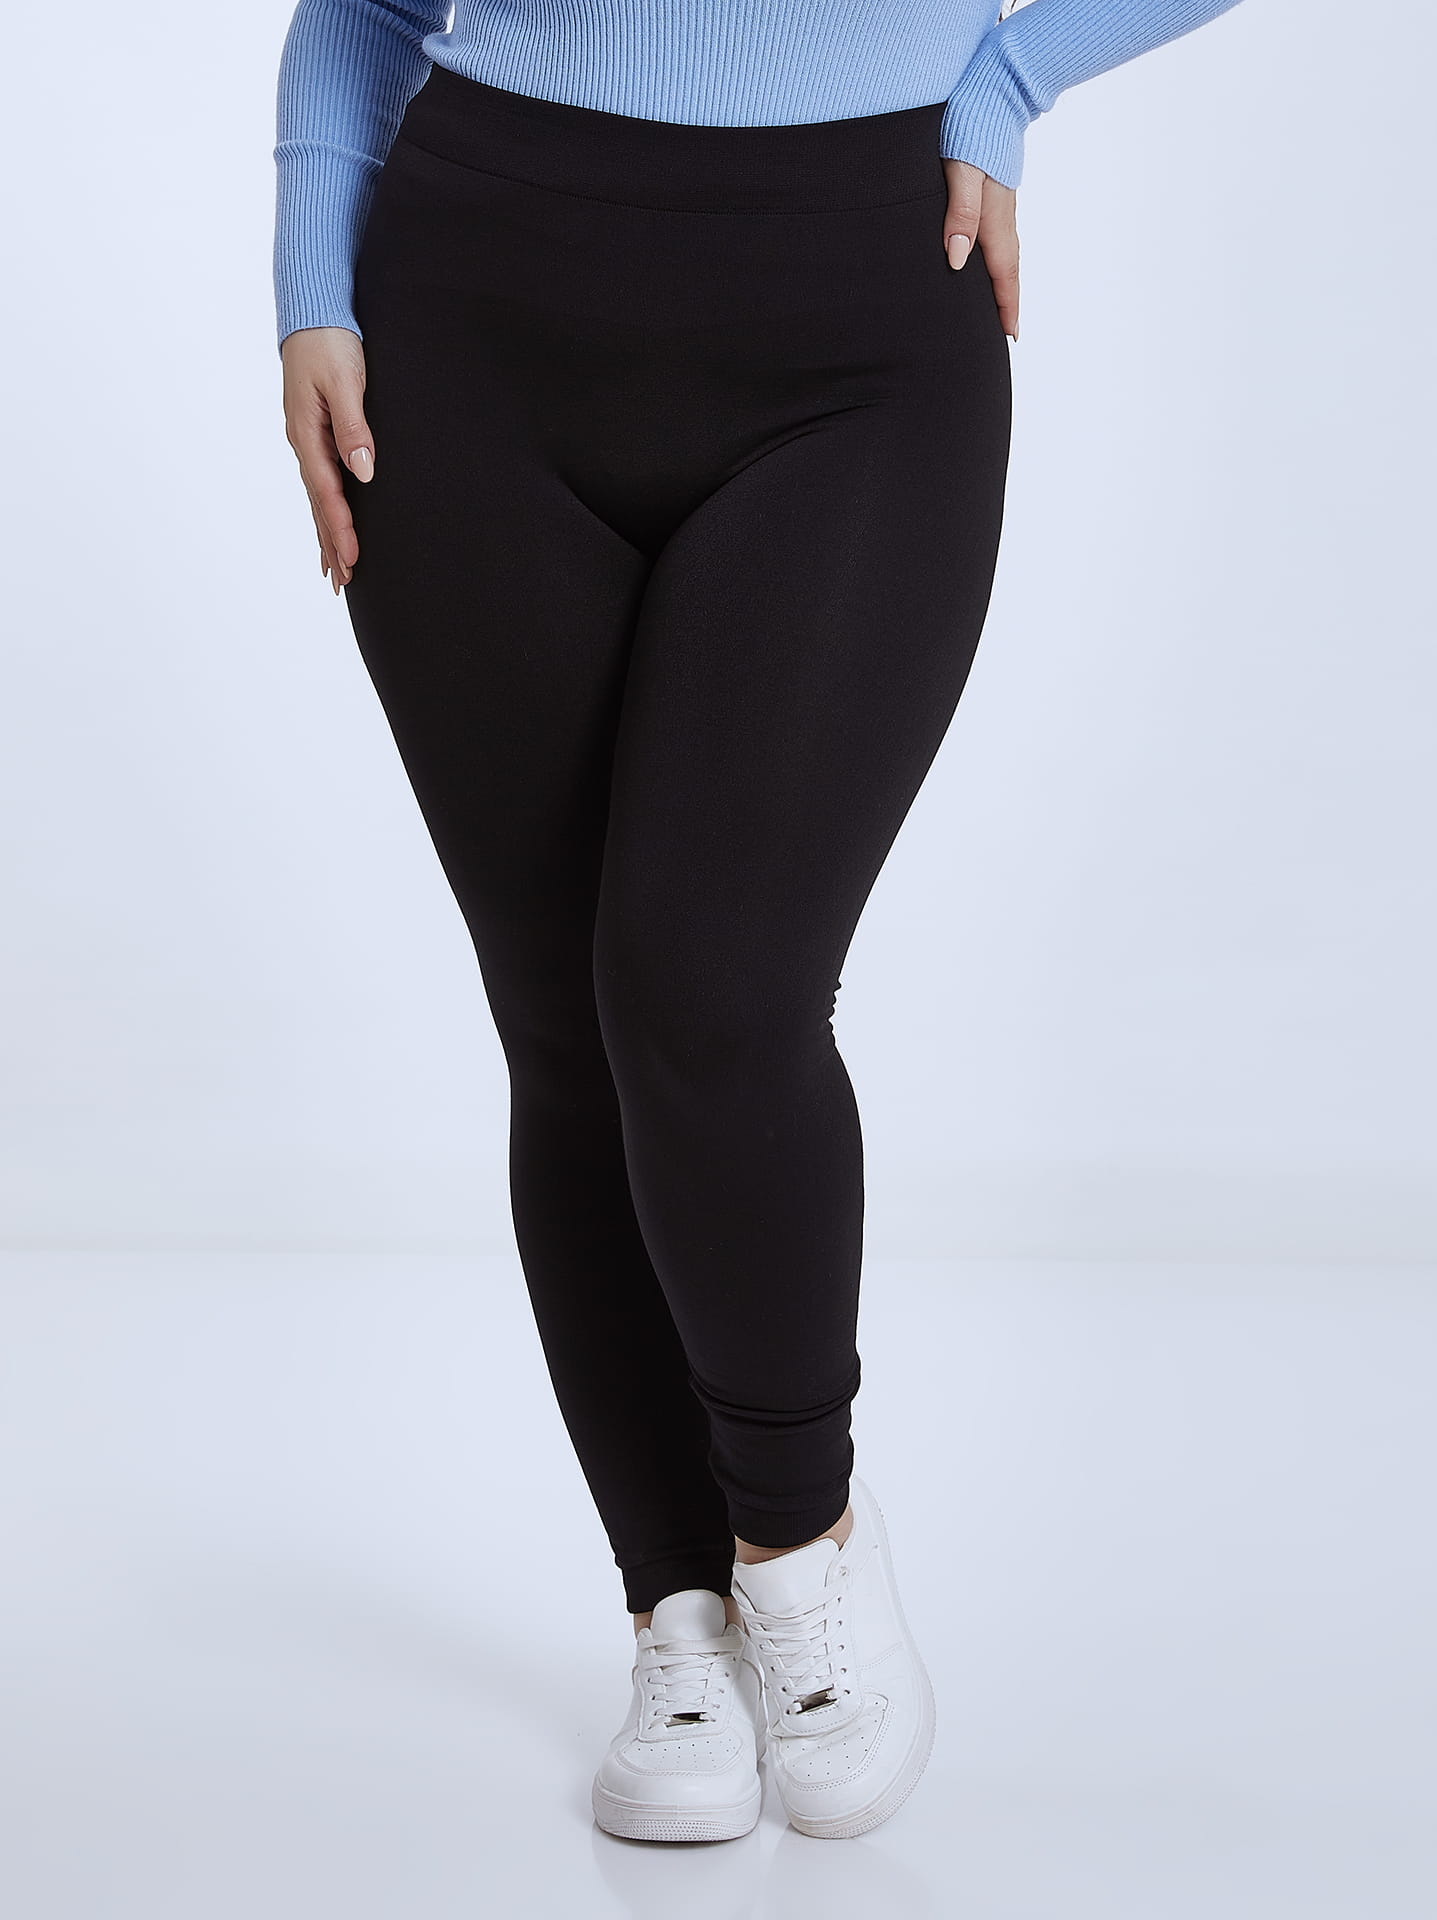 Plus size thermal leggings curvy in black, 4.99€